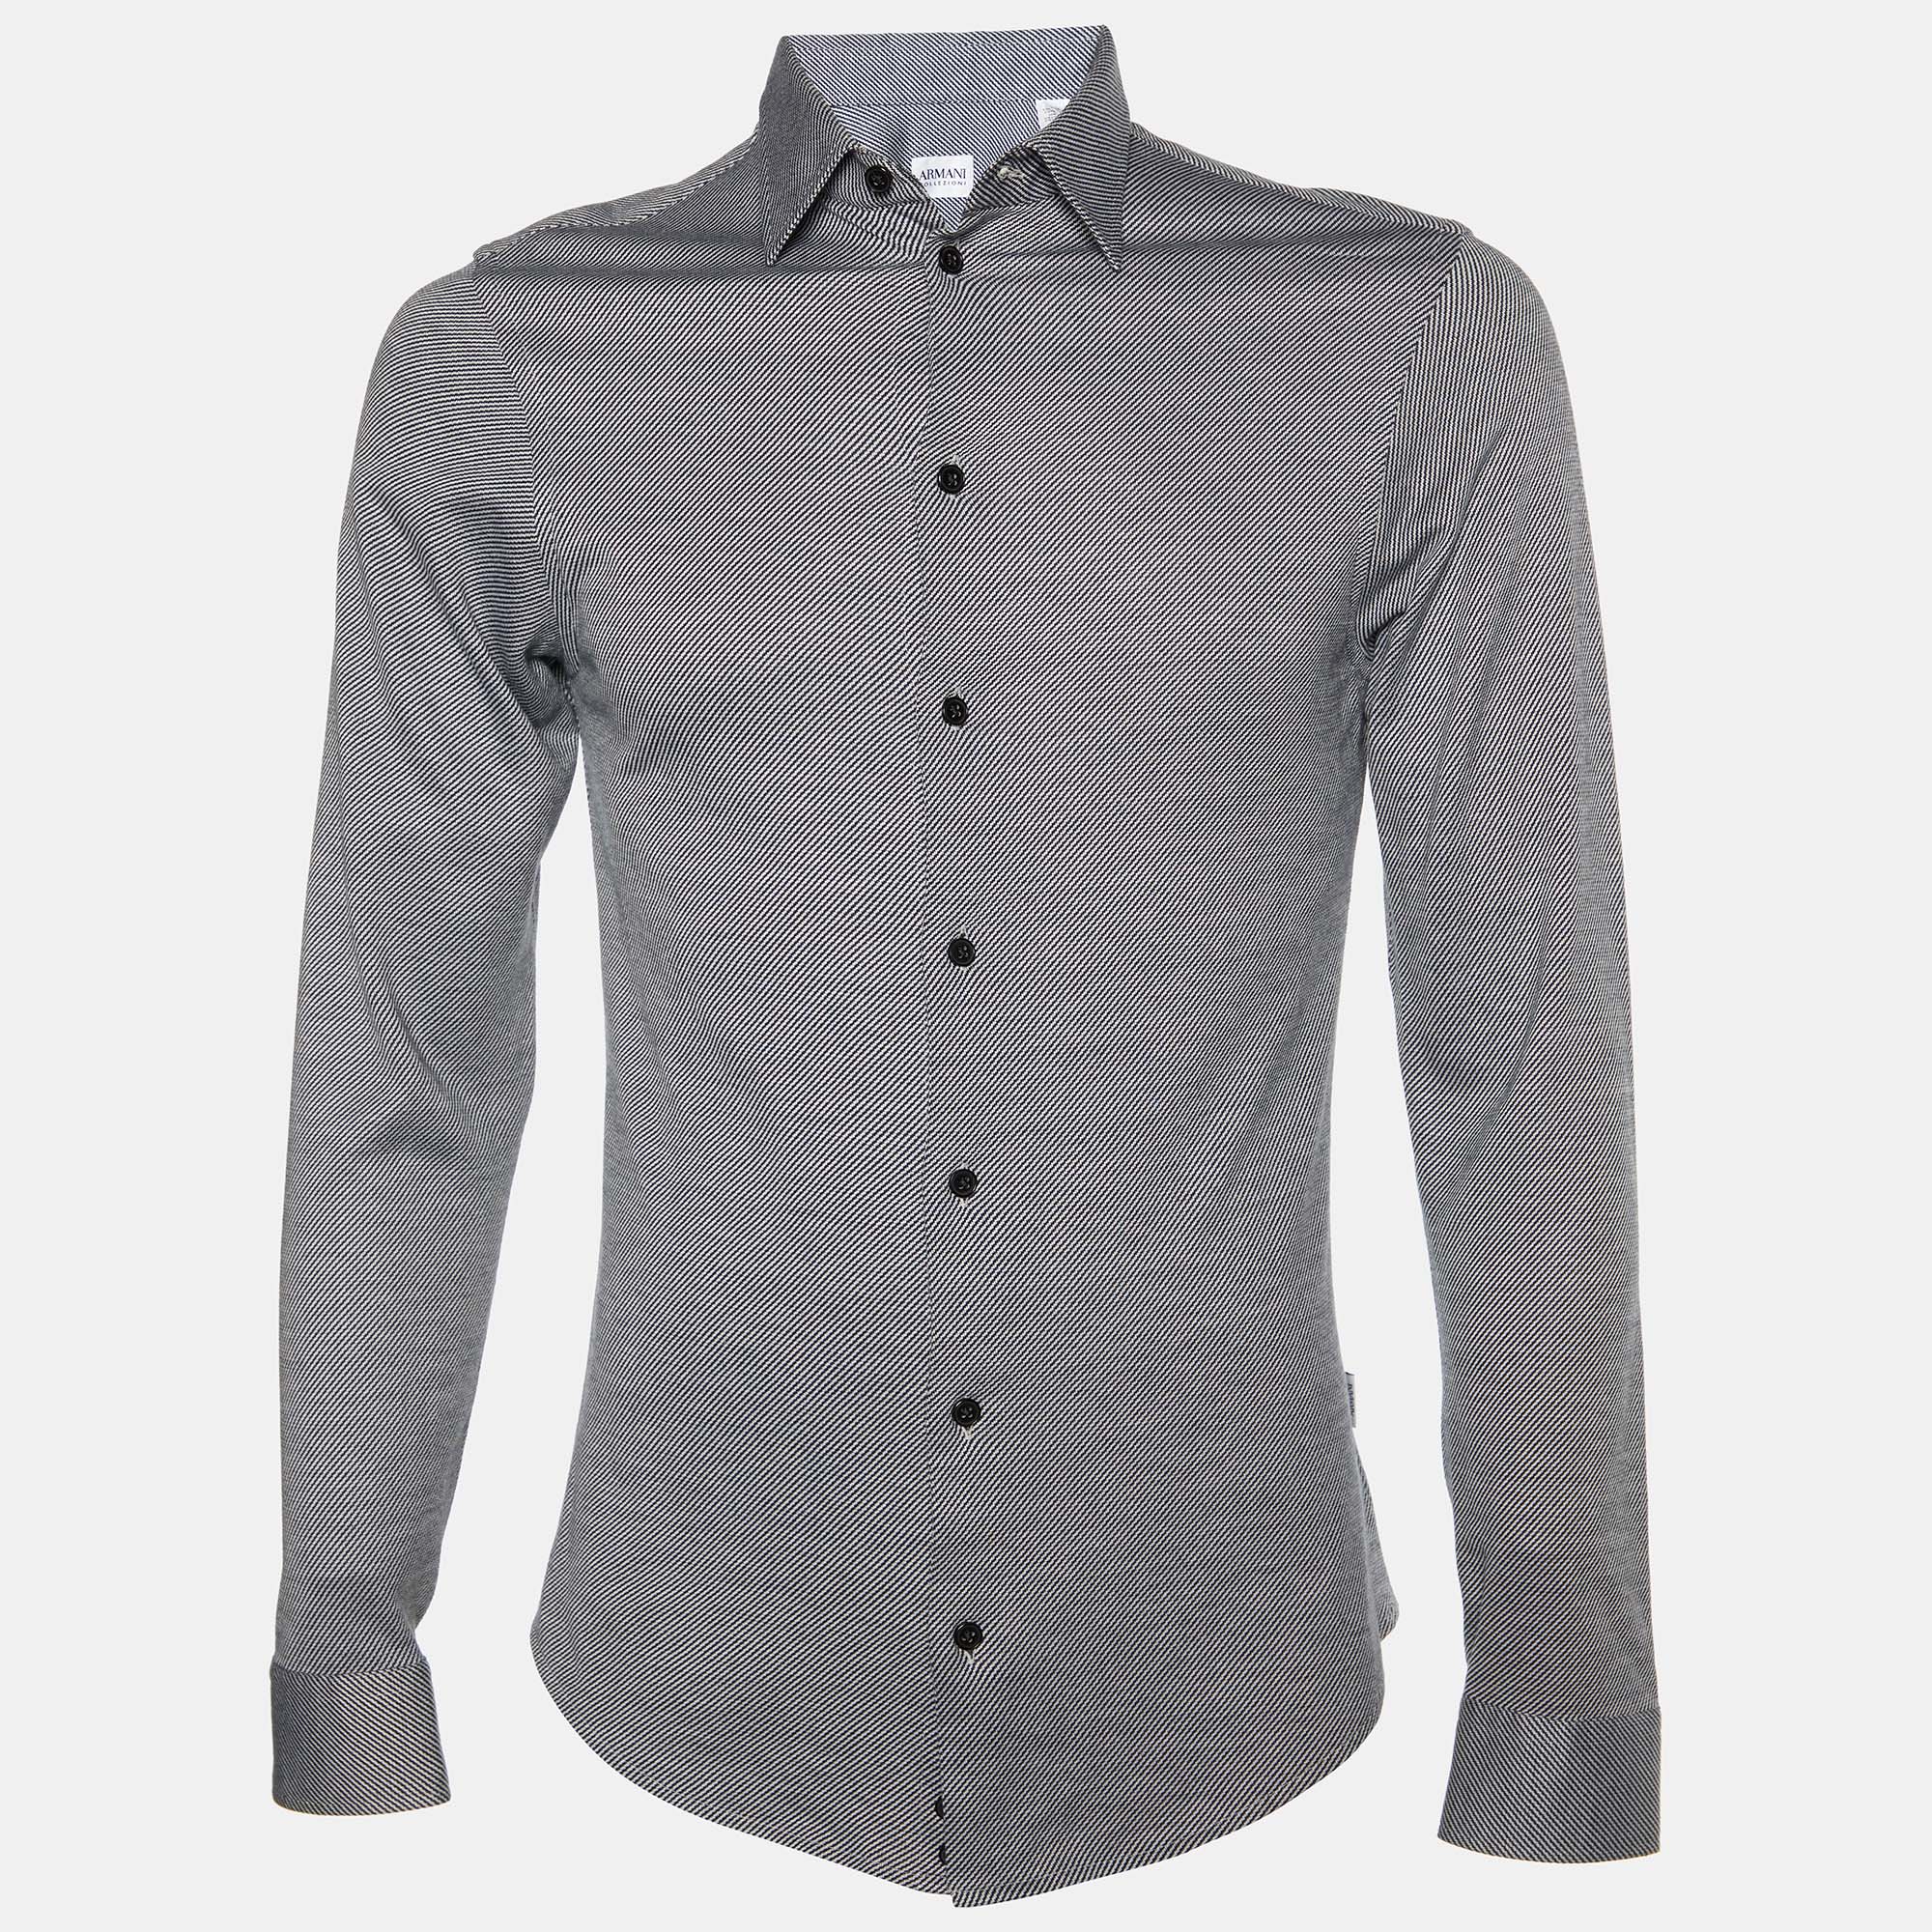 Armani Collezioni Black & White Cotton Knit Button Front Shirt S